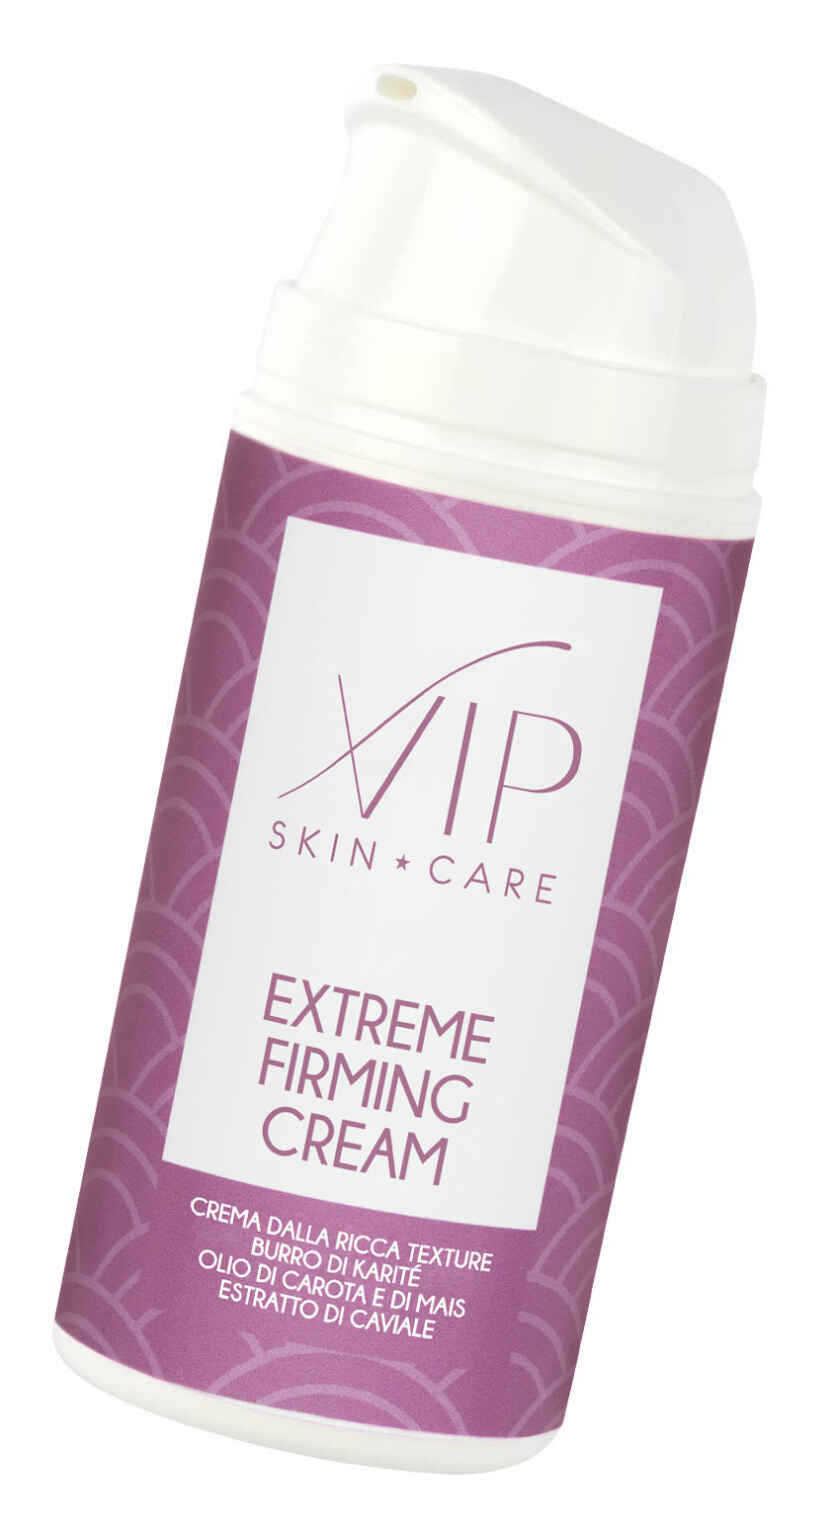 Linea Vip Skin Care